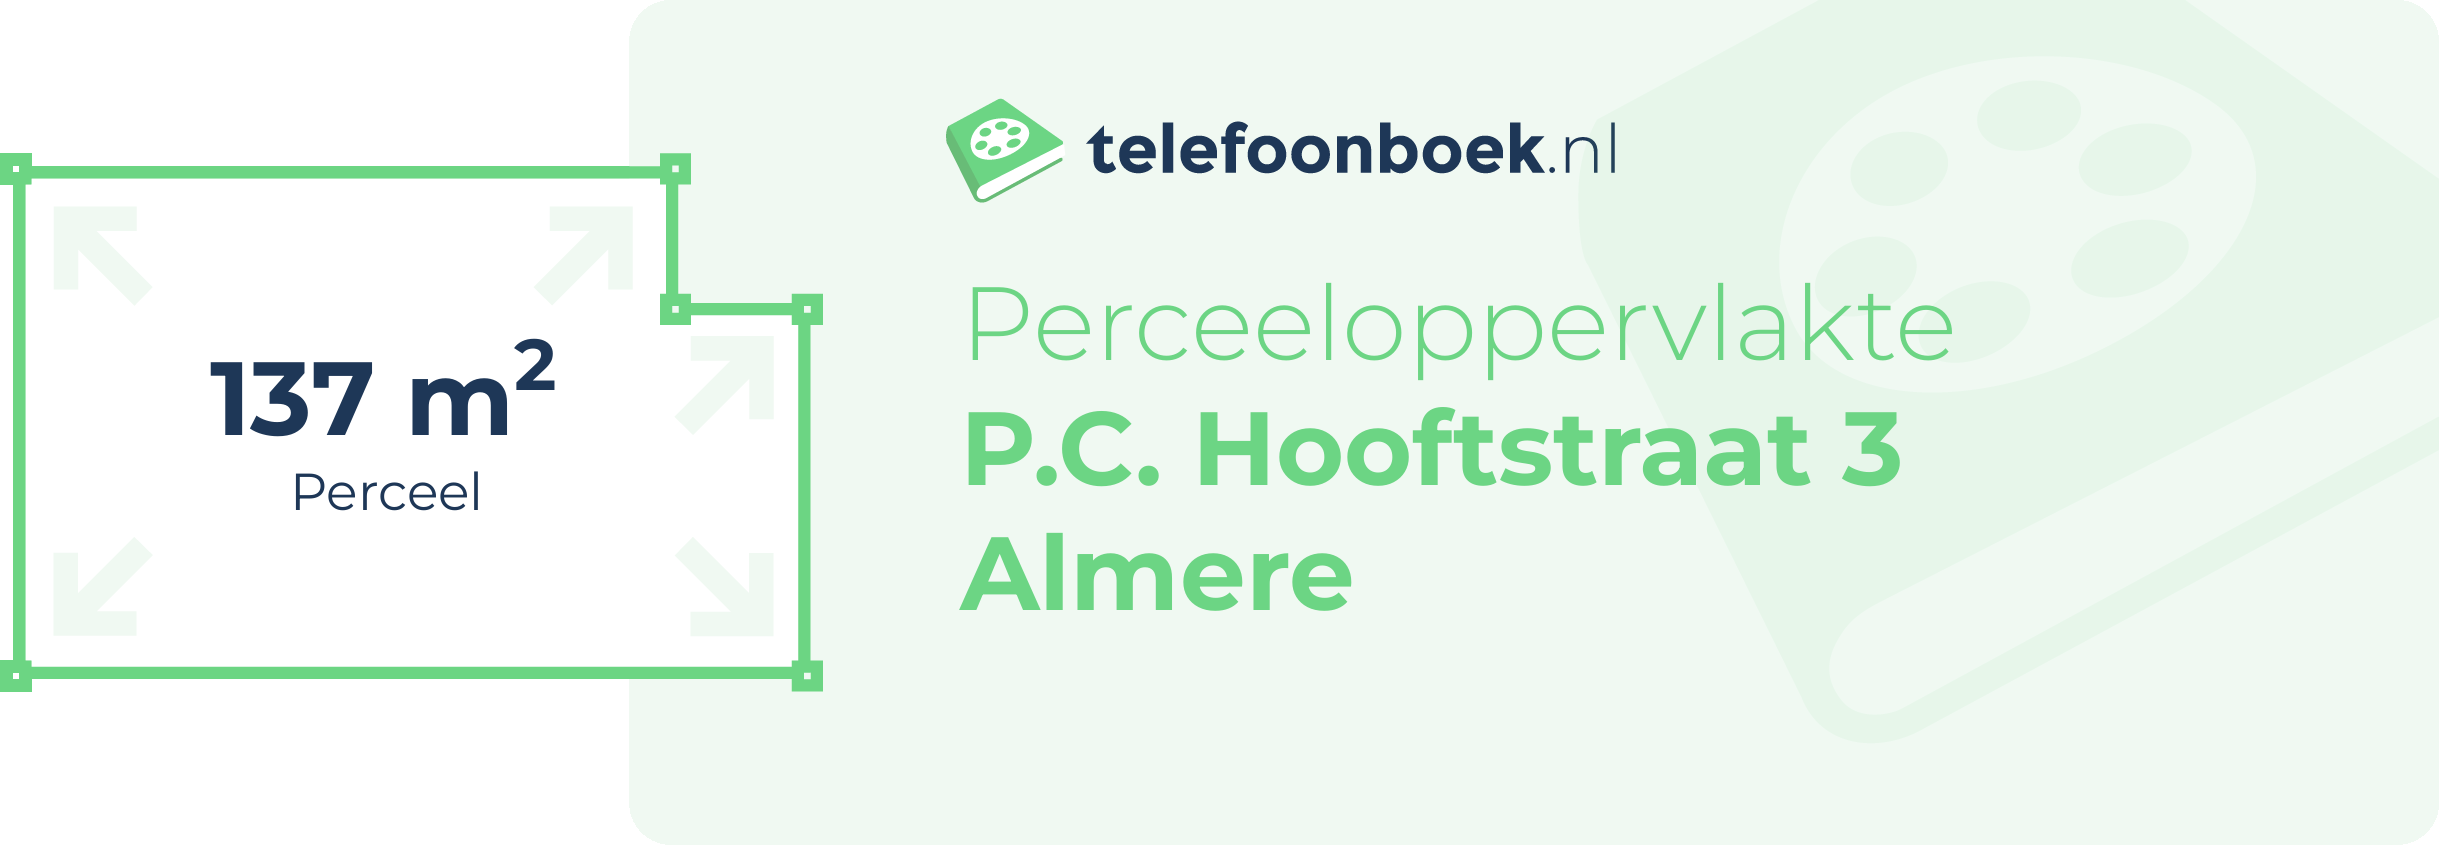 Perceeloppervlakte P.C. Hooftstraat 3 Almere